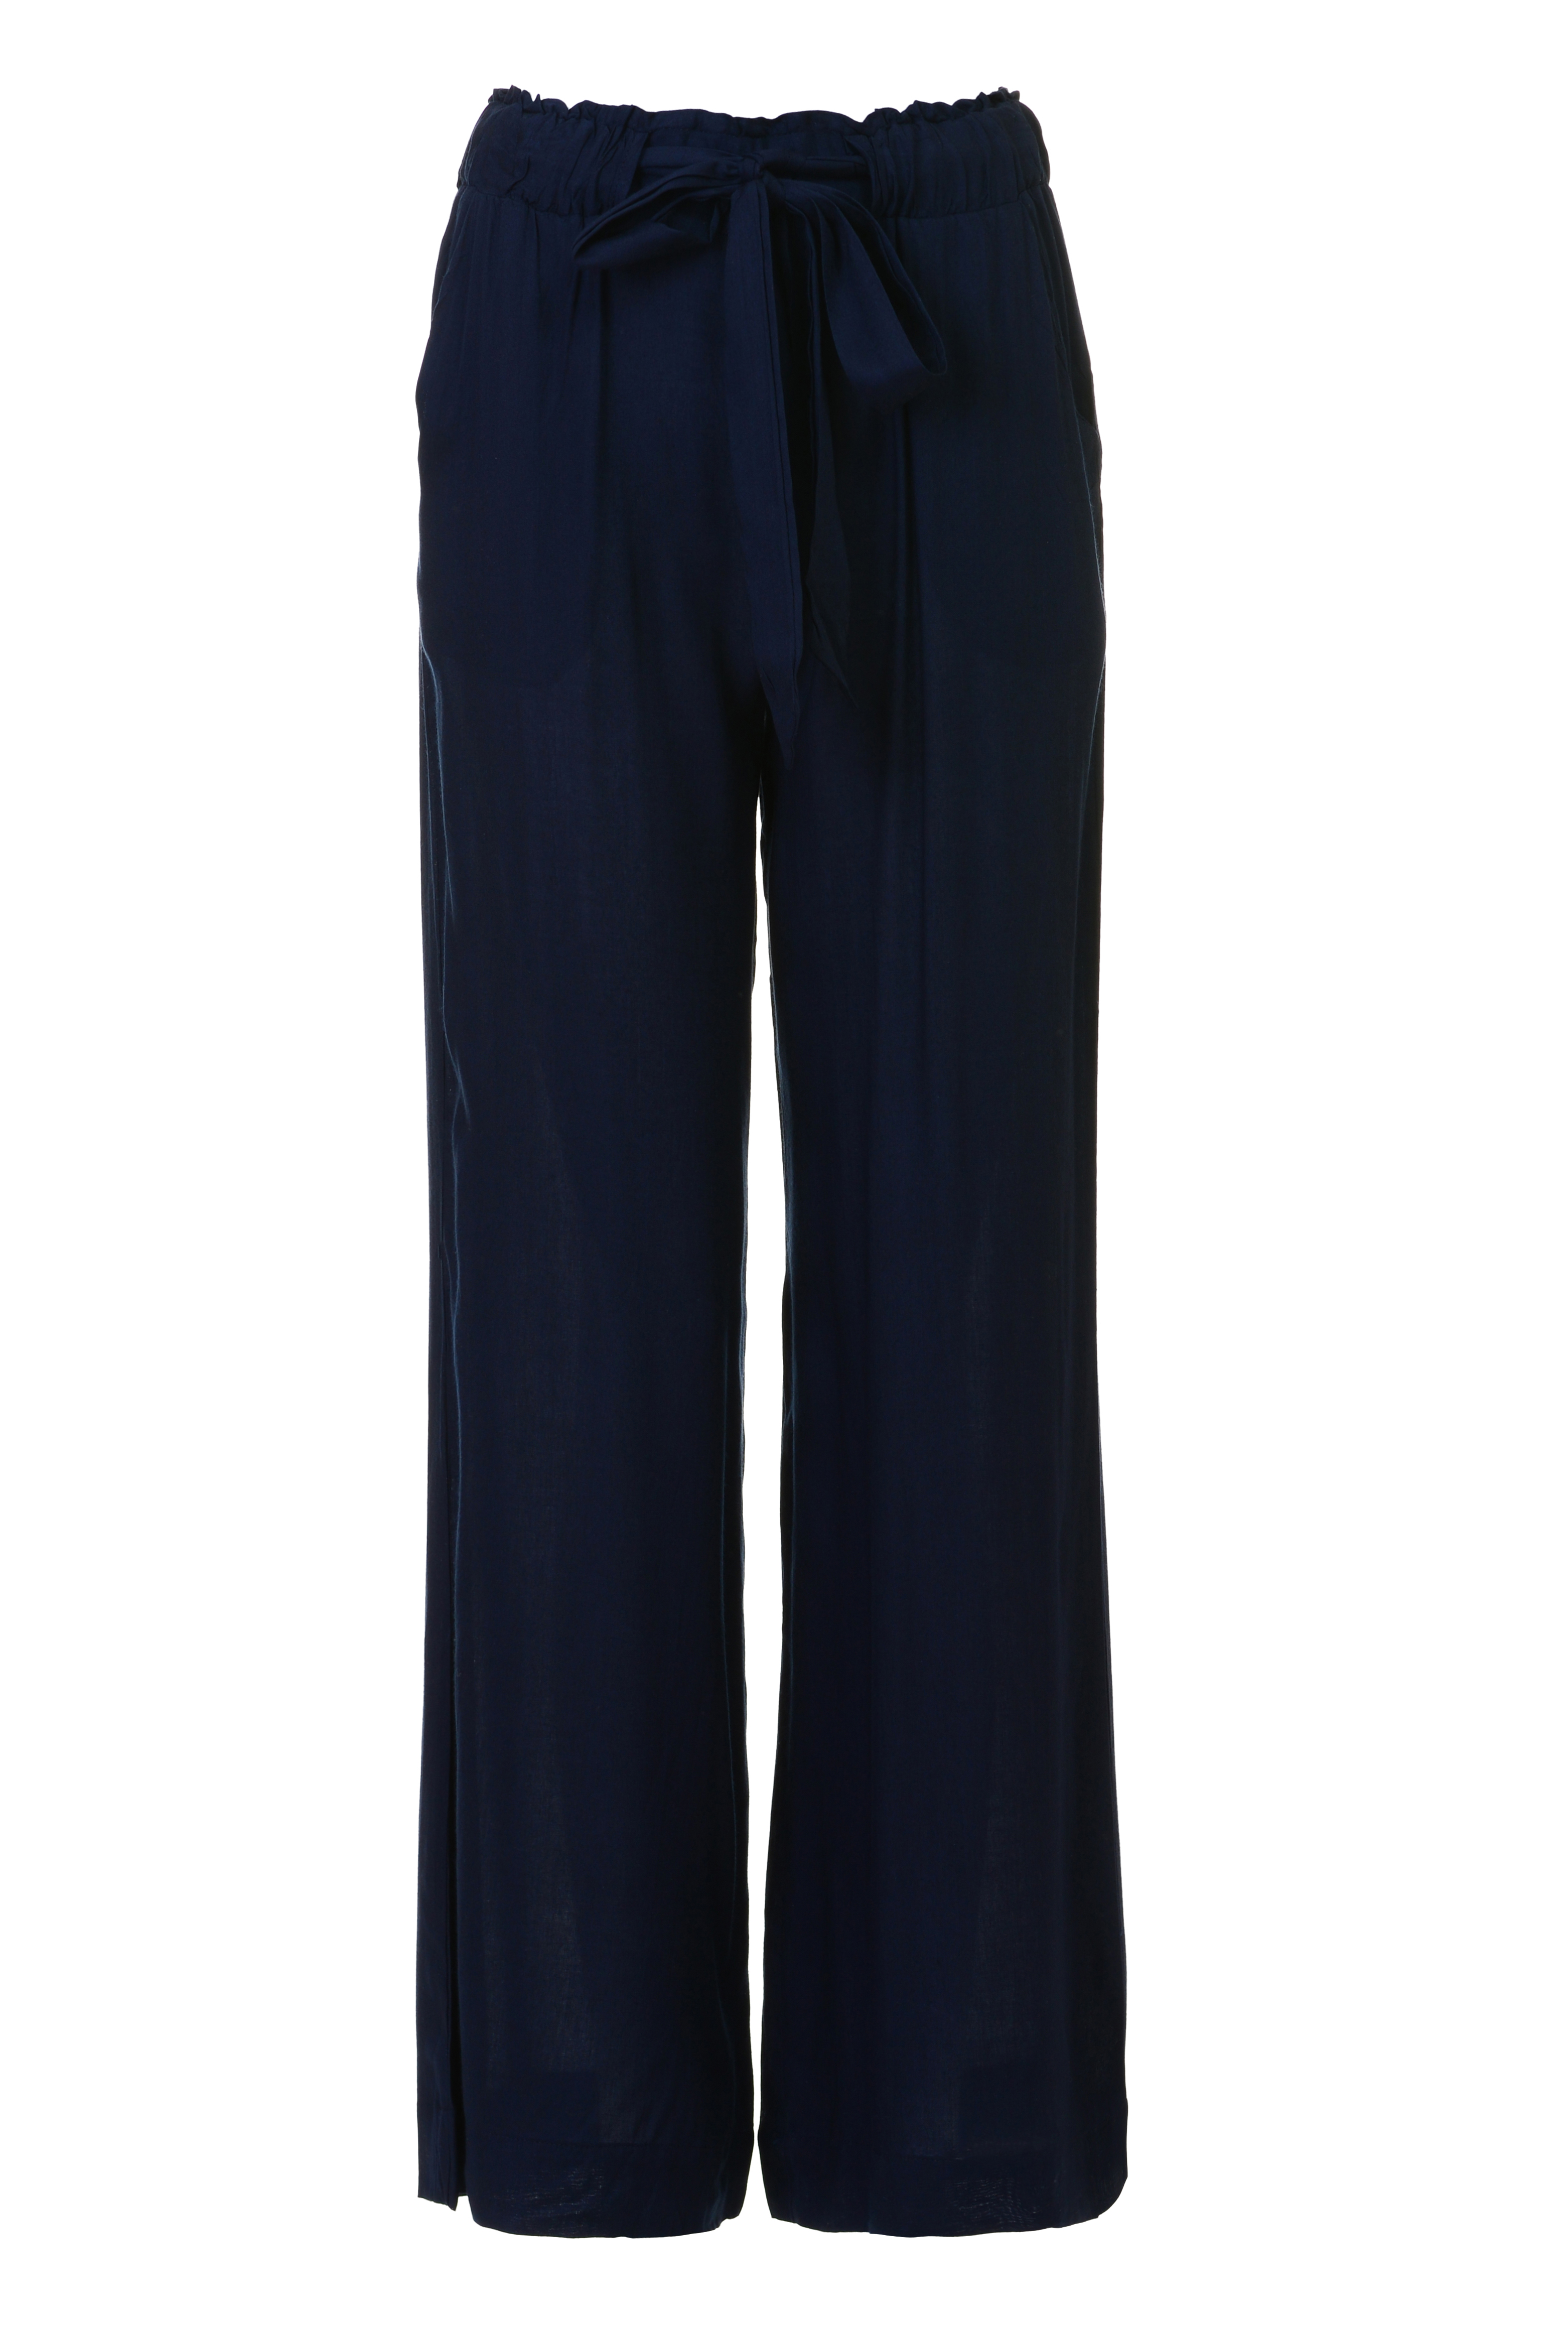 Однотонные брюки-палаццо (арт. baon B297044), размер S, цвет синий Однотонные брюки-палаццо (арт. baon B297044) - фото 3